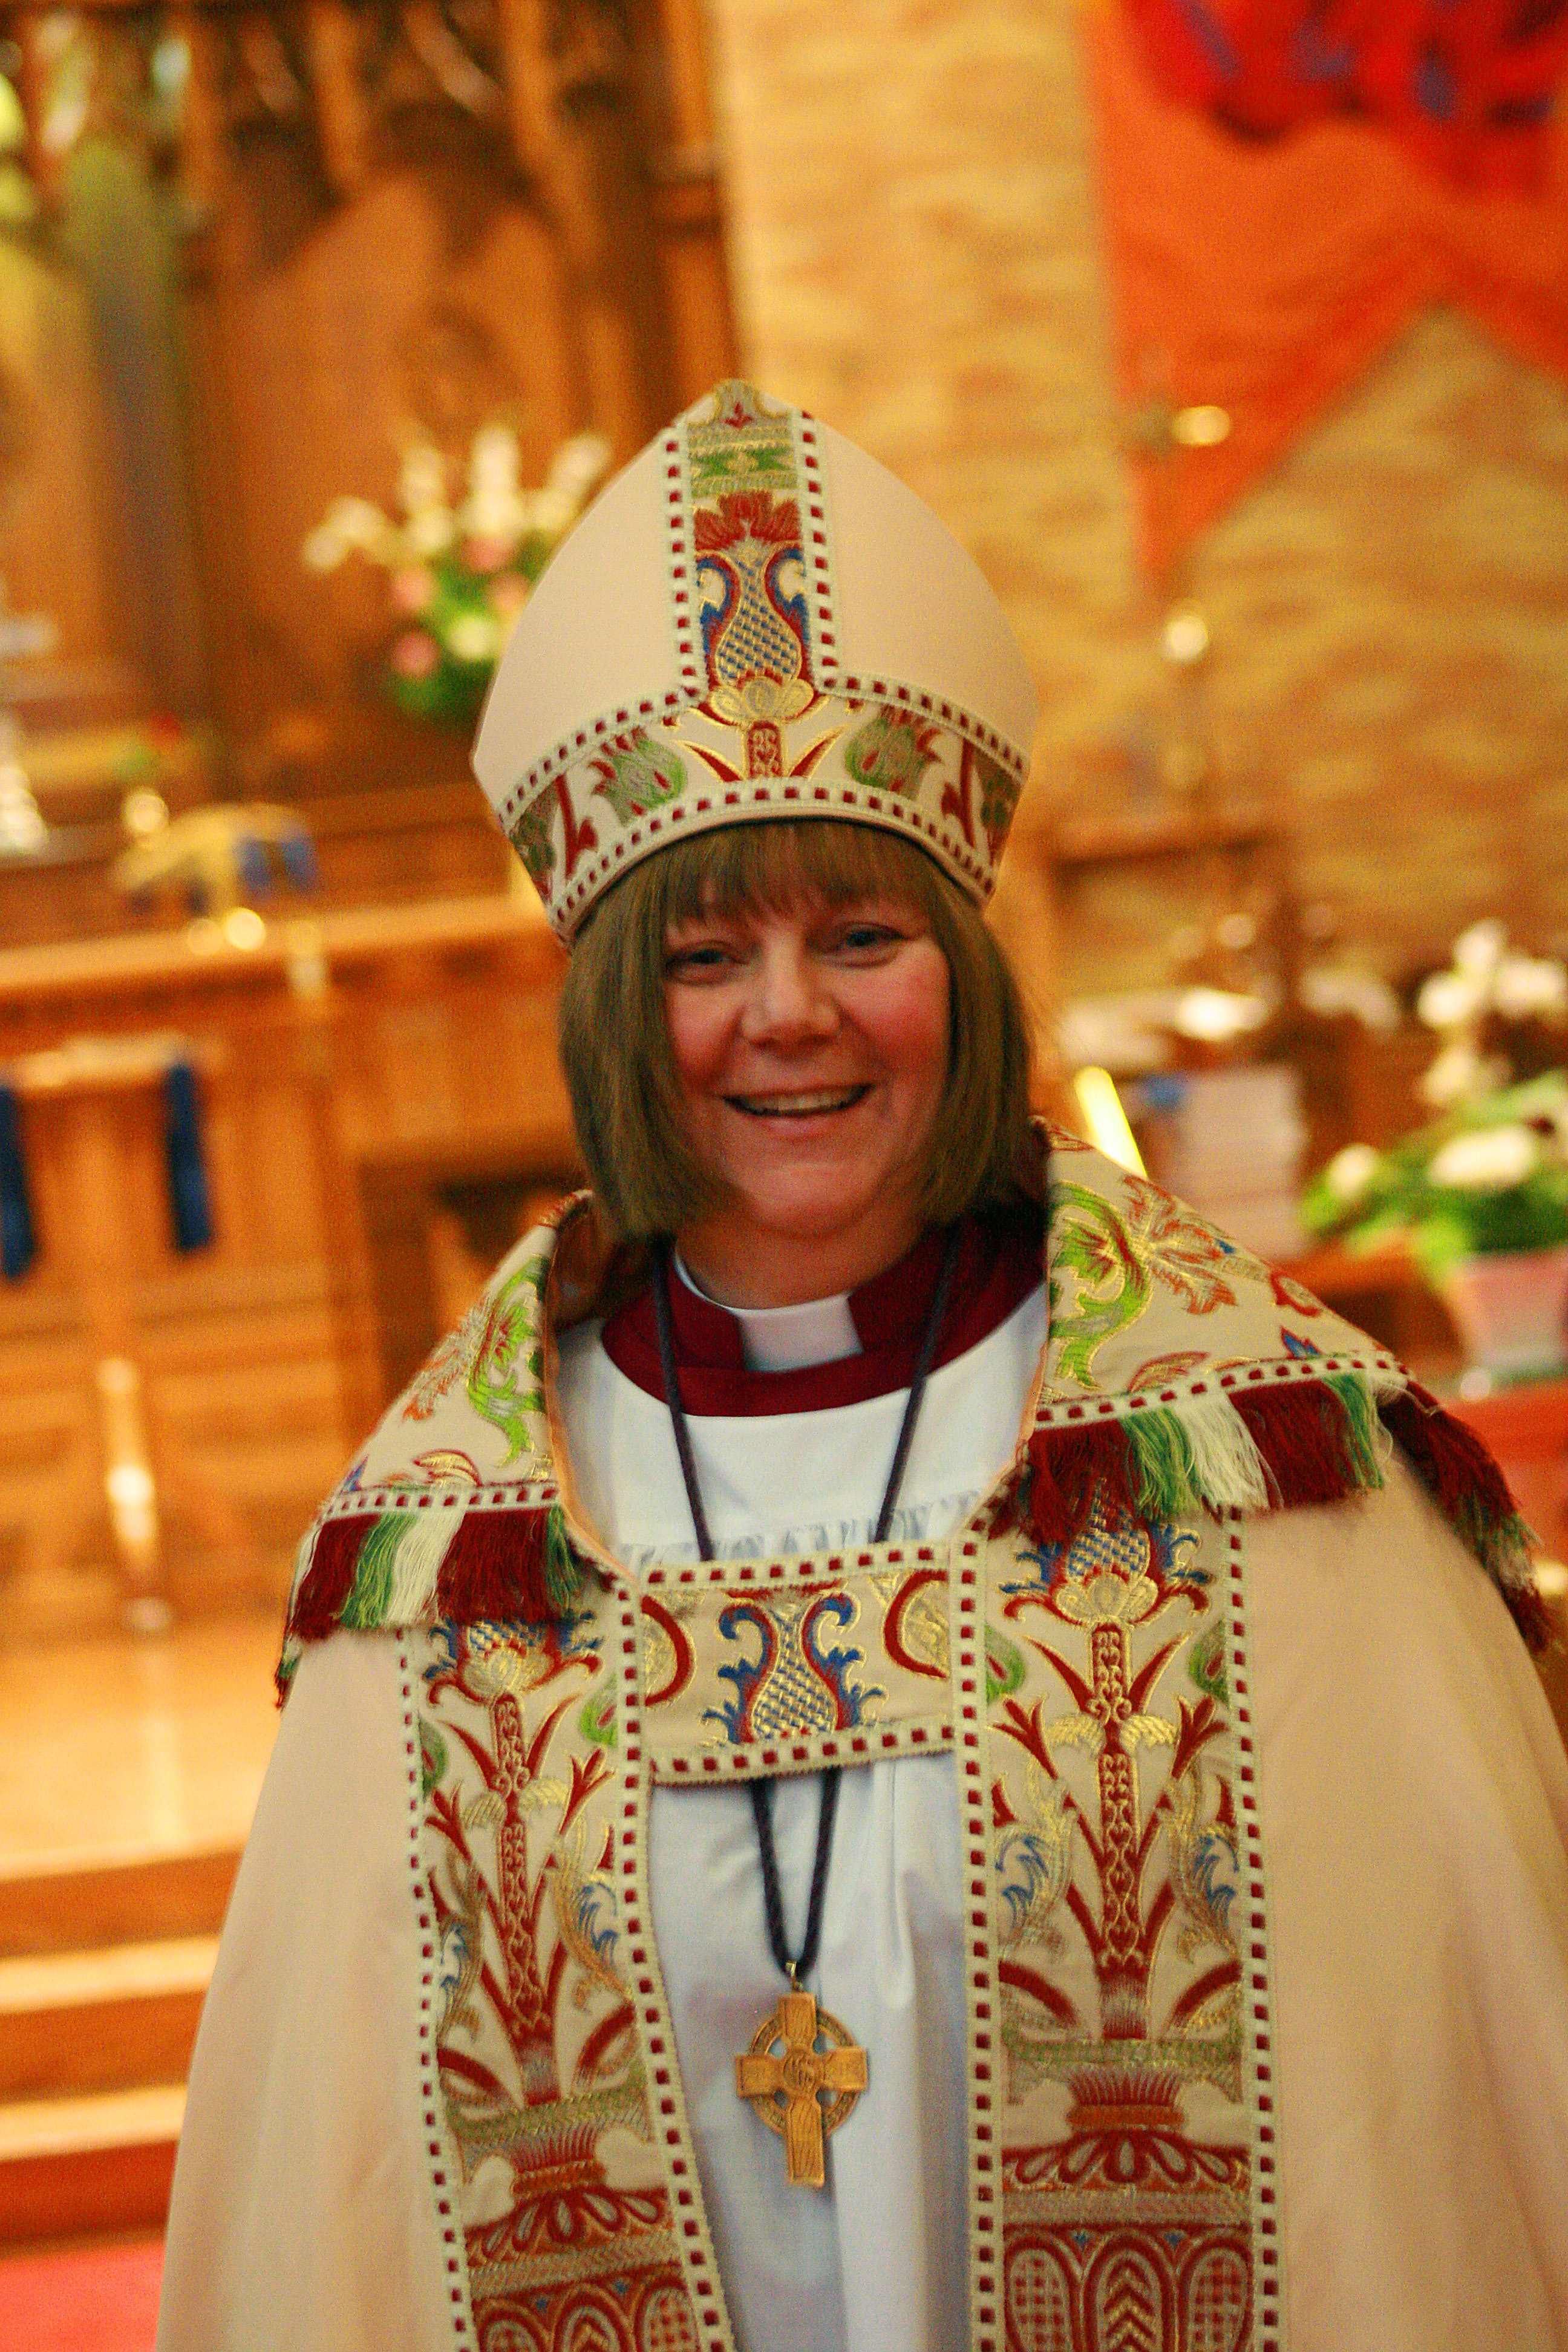 Bishop Jane Alexander